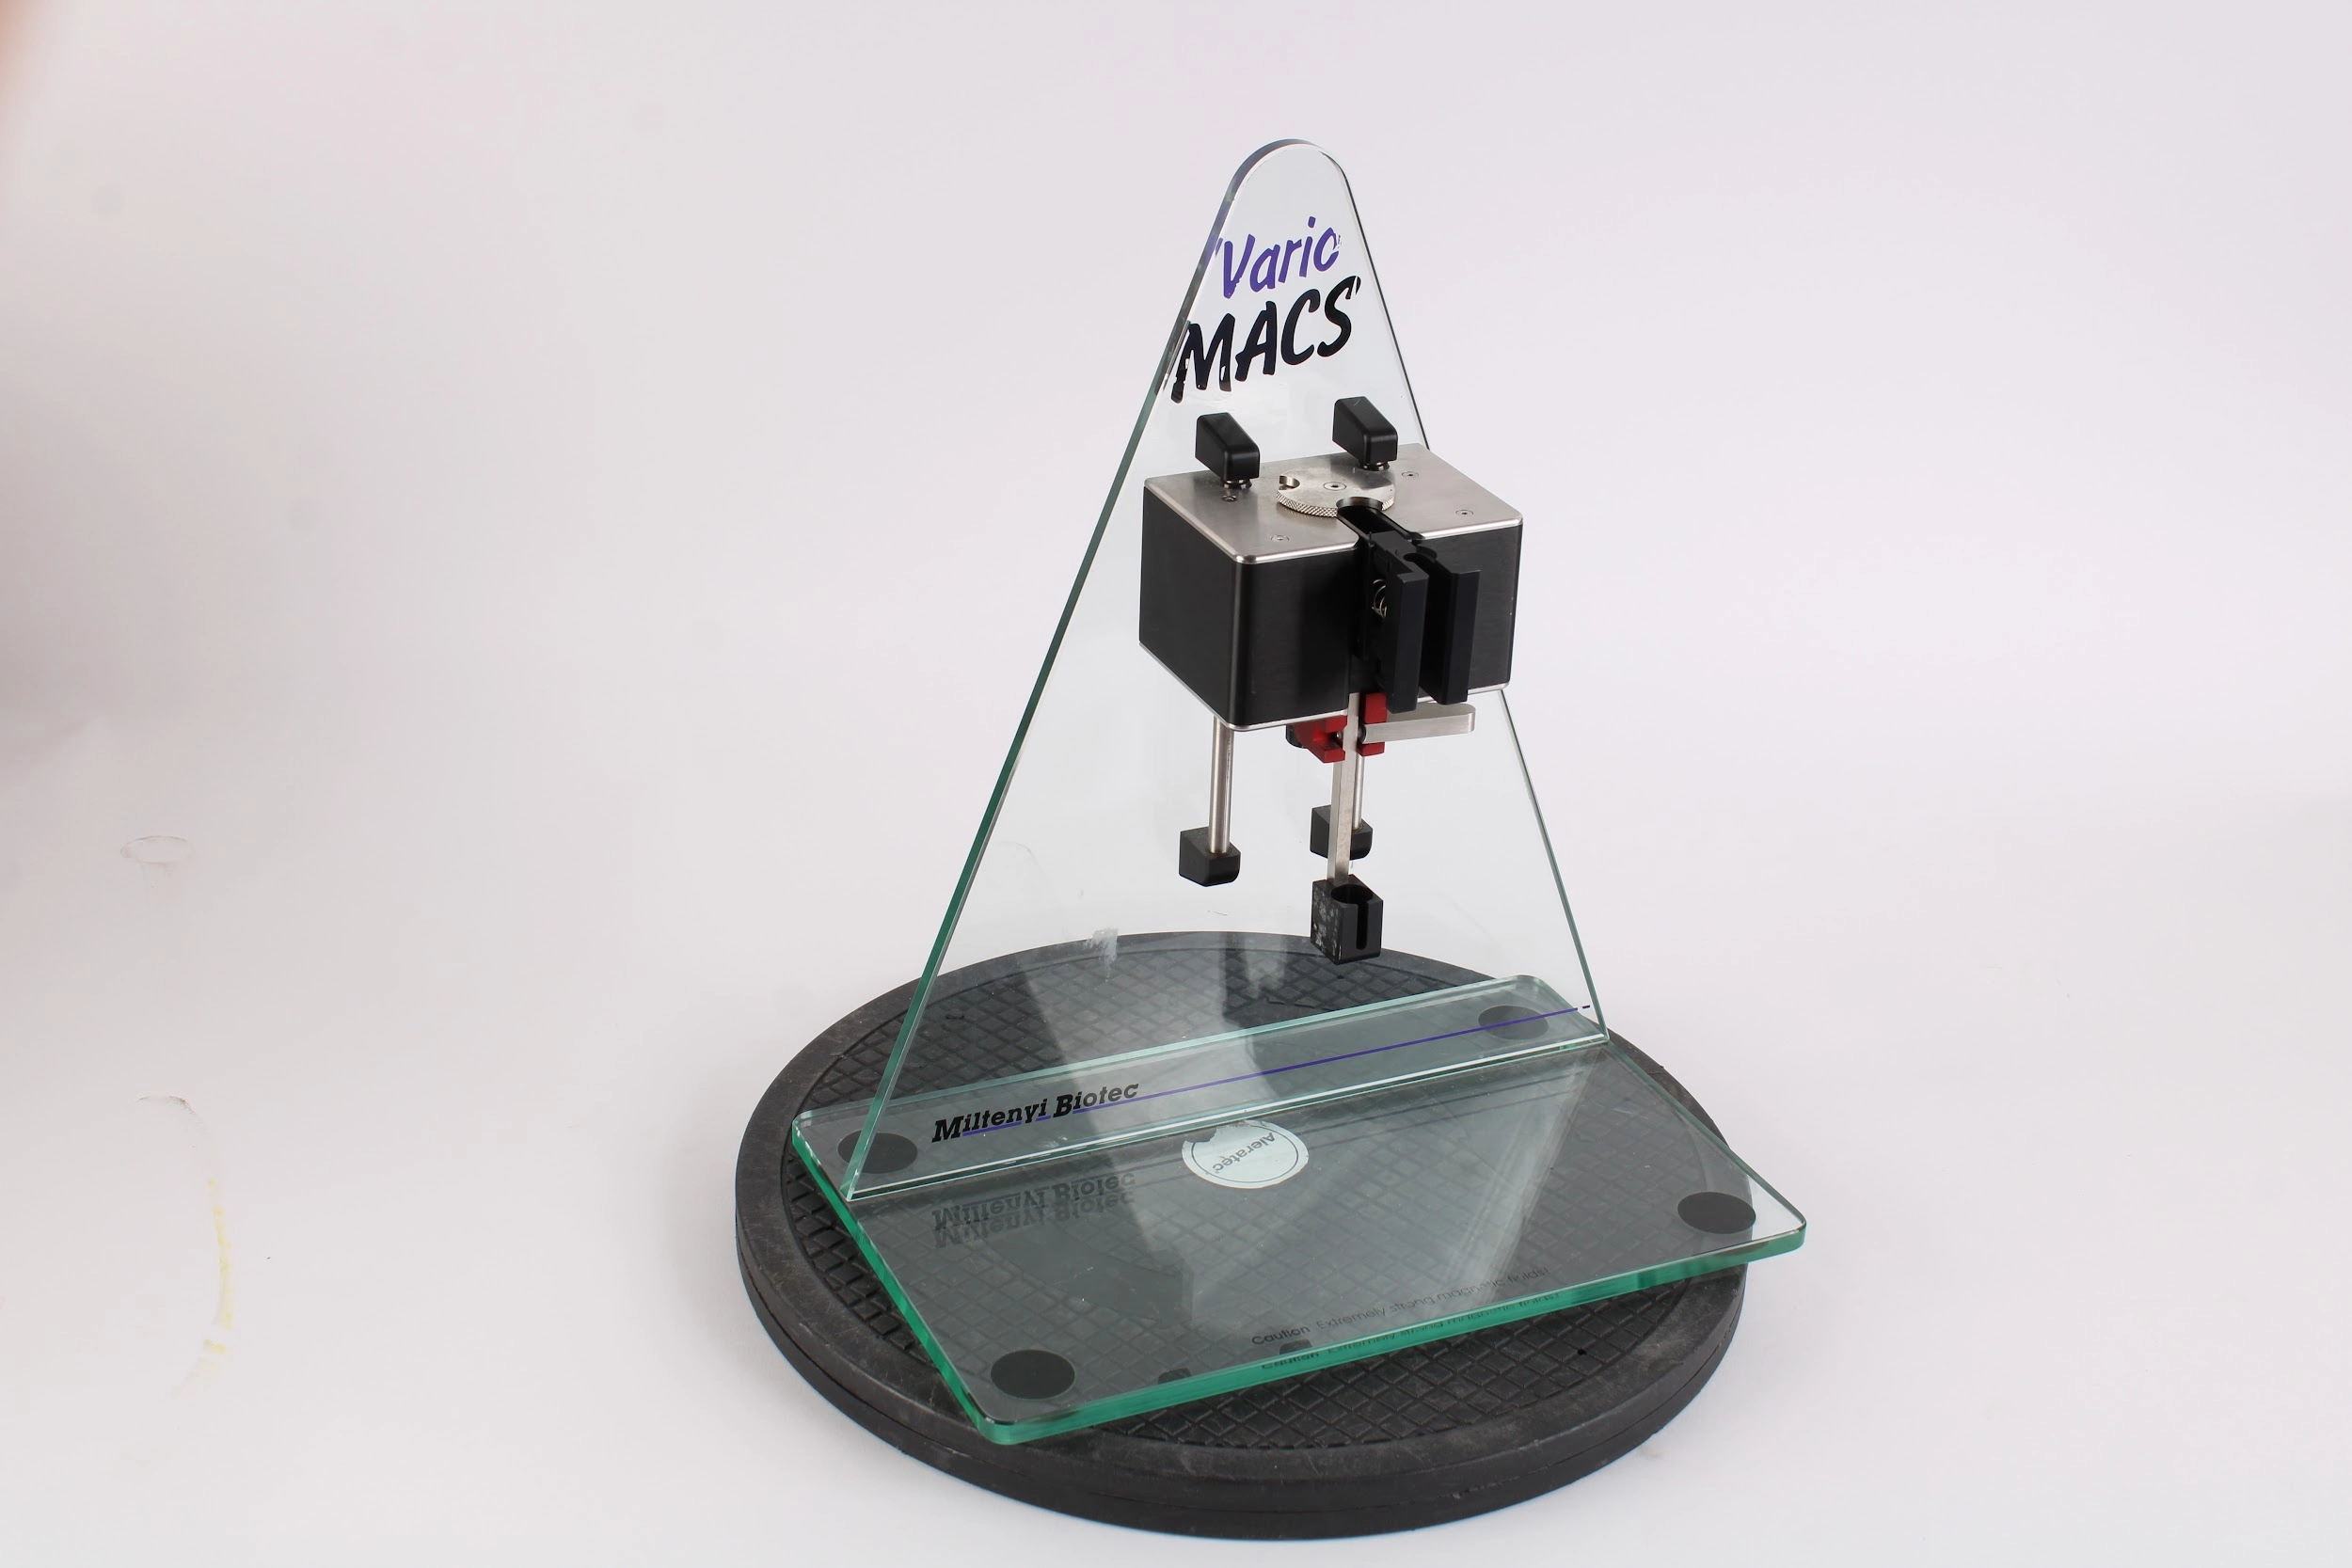 Miltenyi Biotec Vario Macs Magnetic Cell Separator